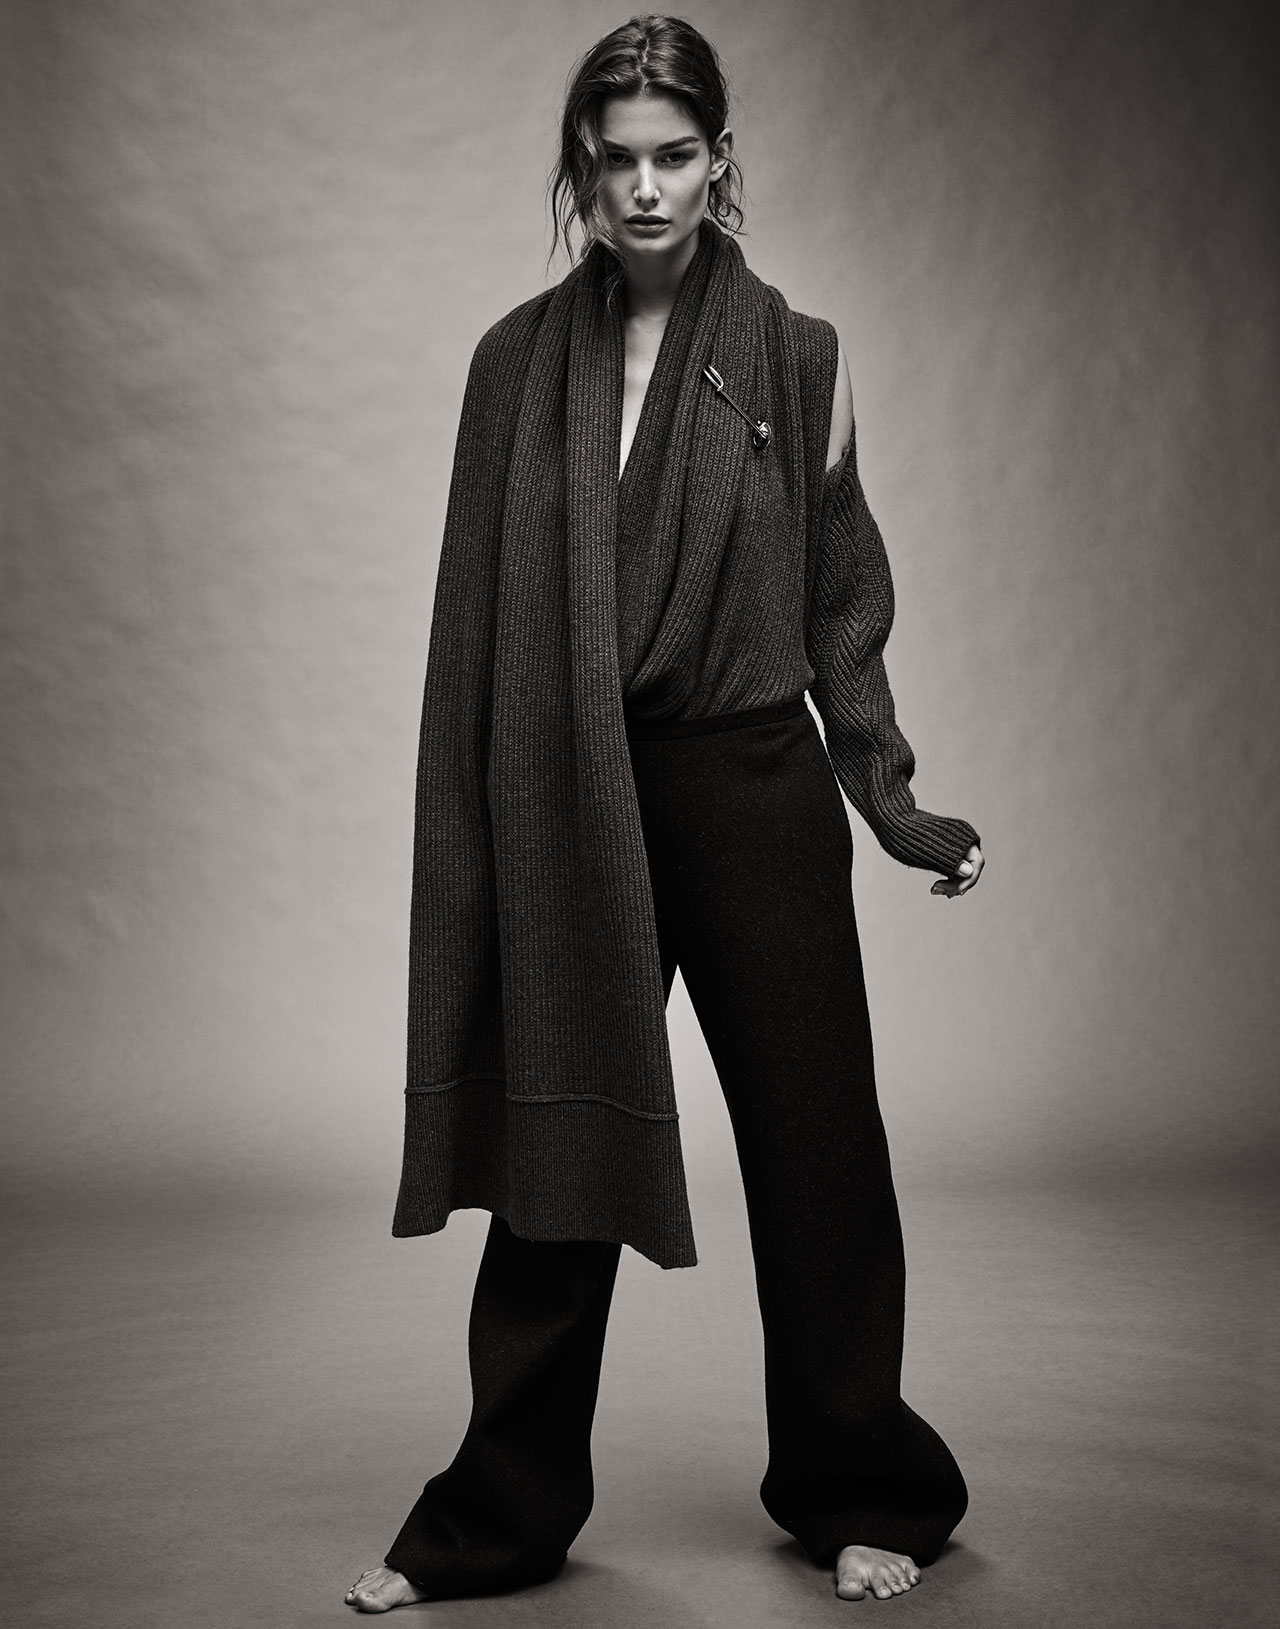 Ophelie Guillermand for Models.com